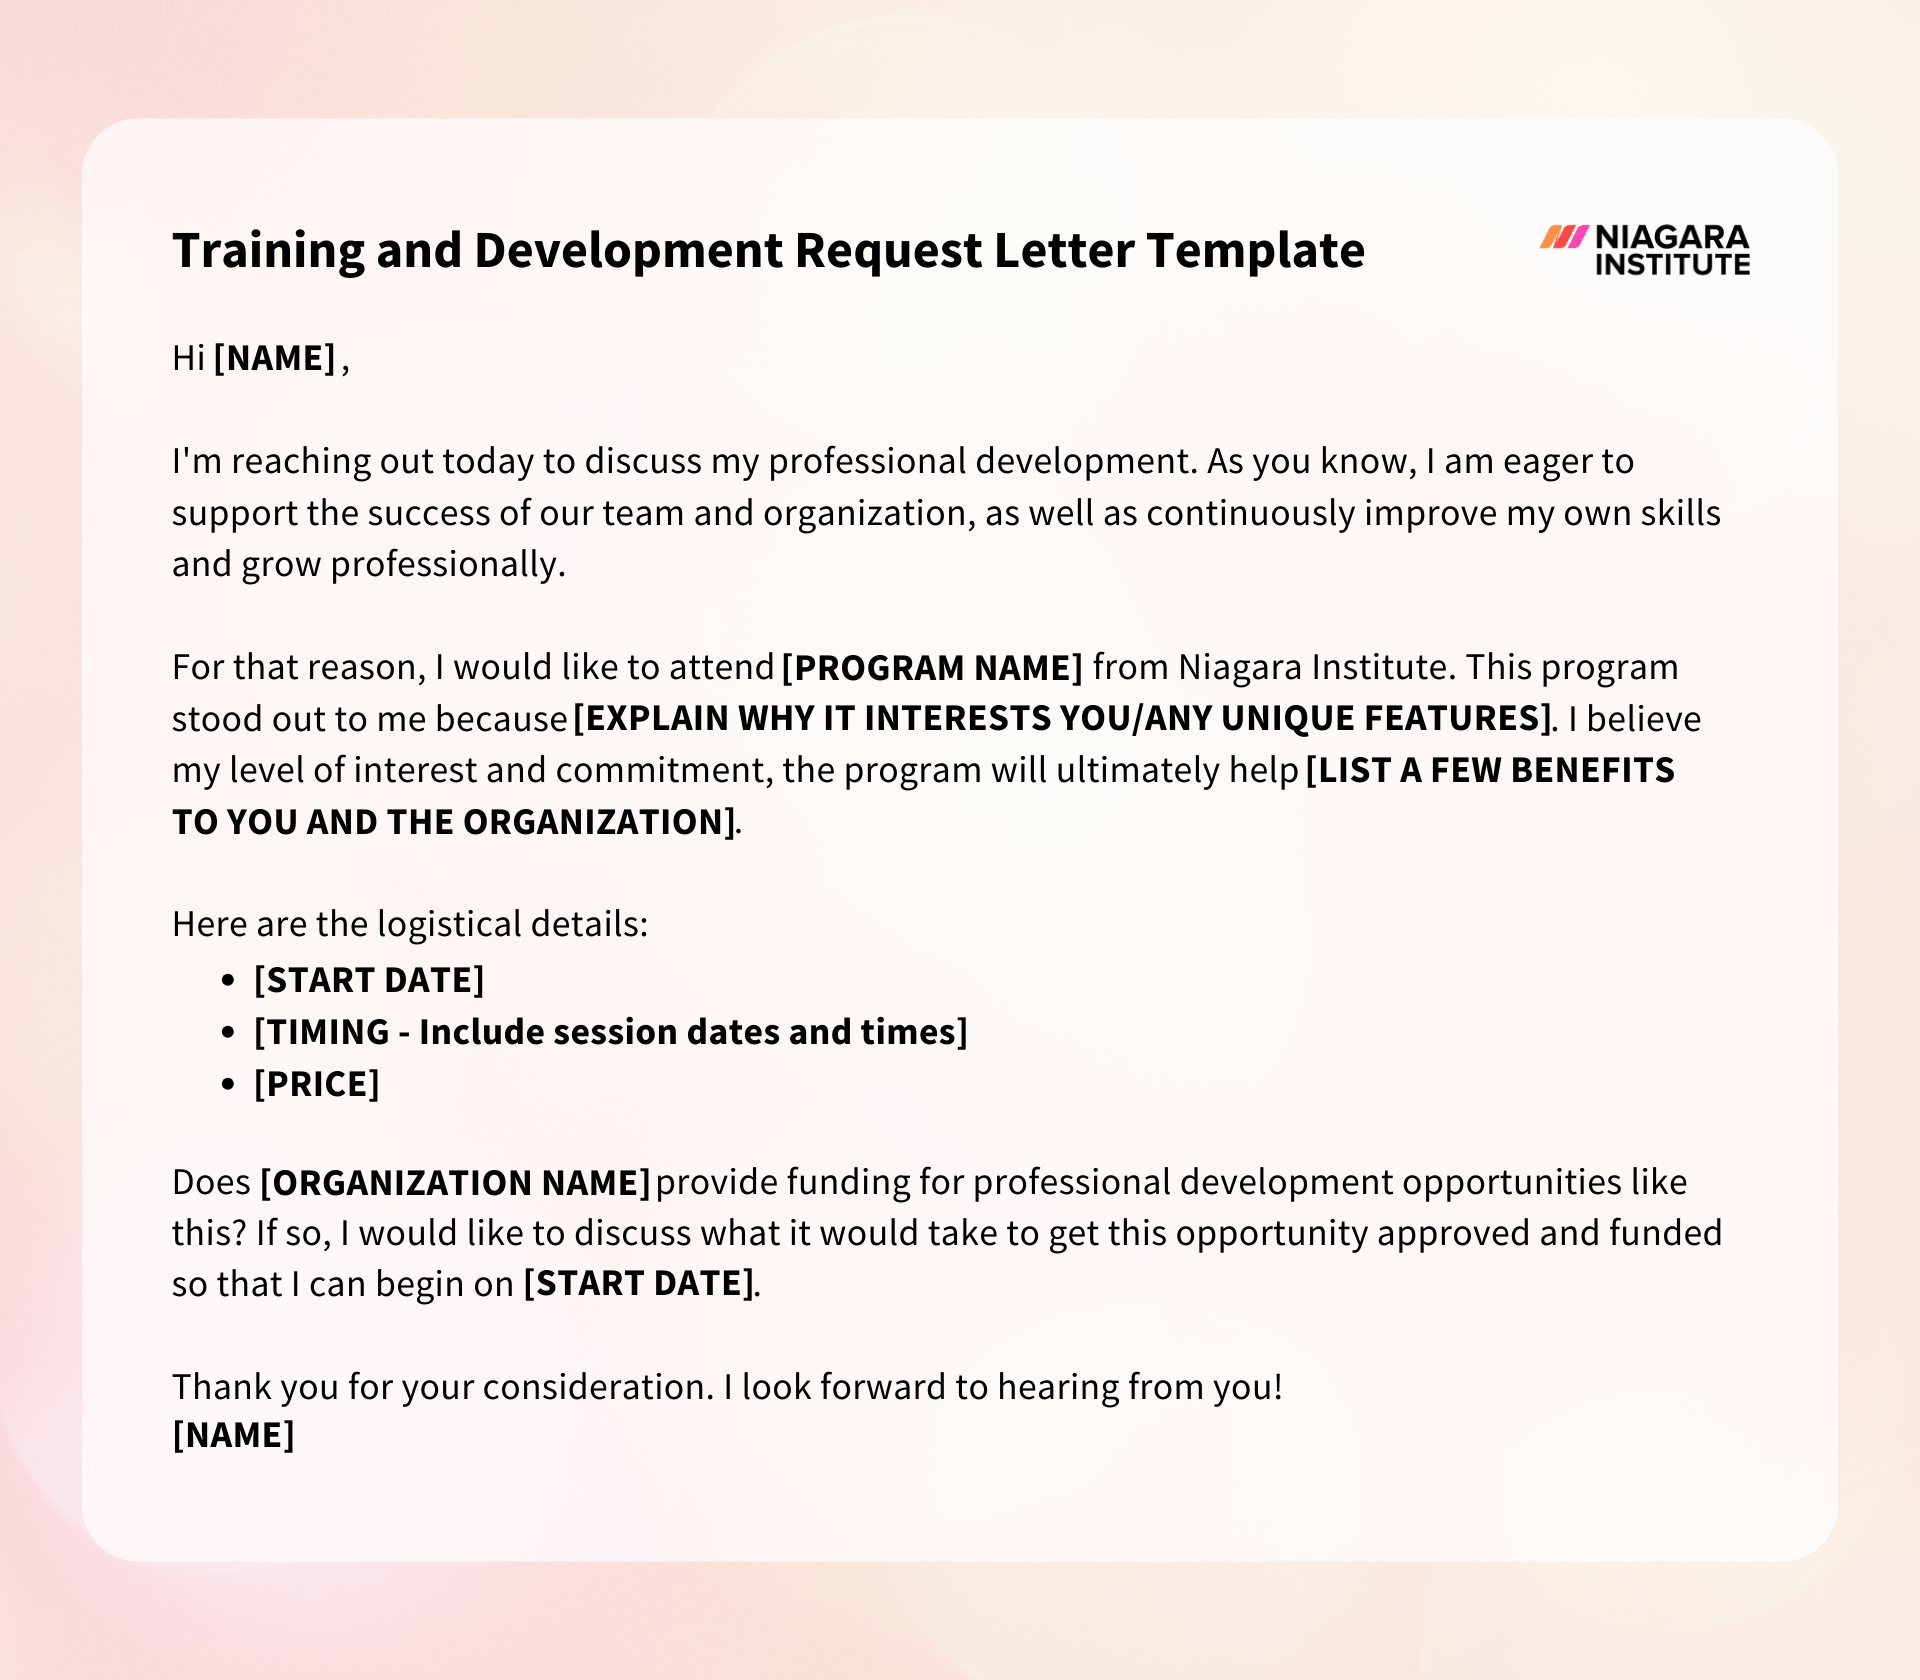 Training and Development Request Letter Template - Niagara Institute-1